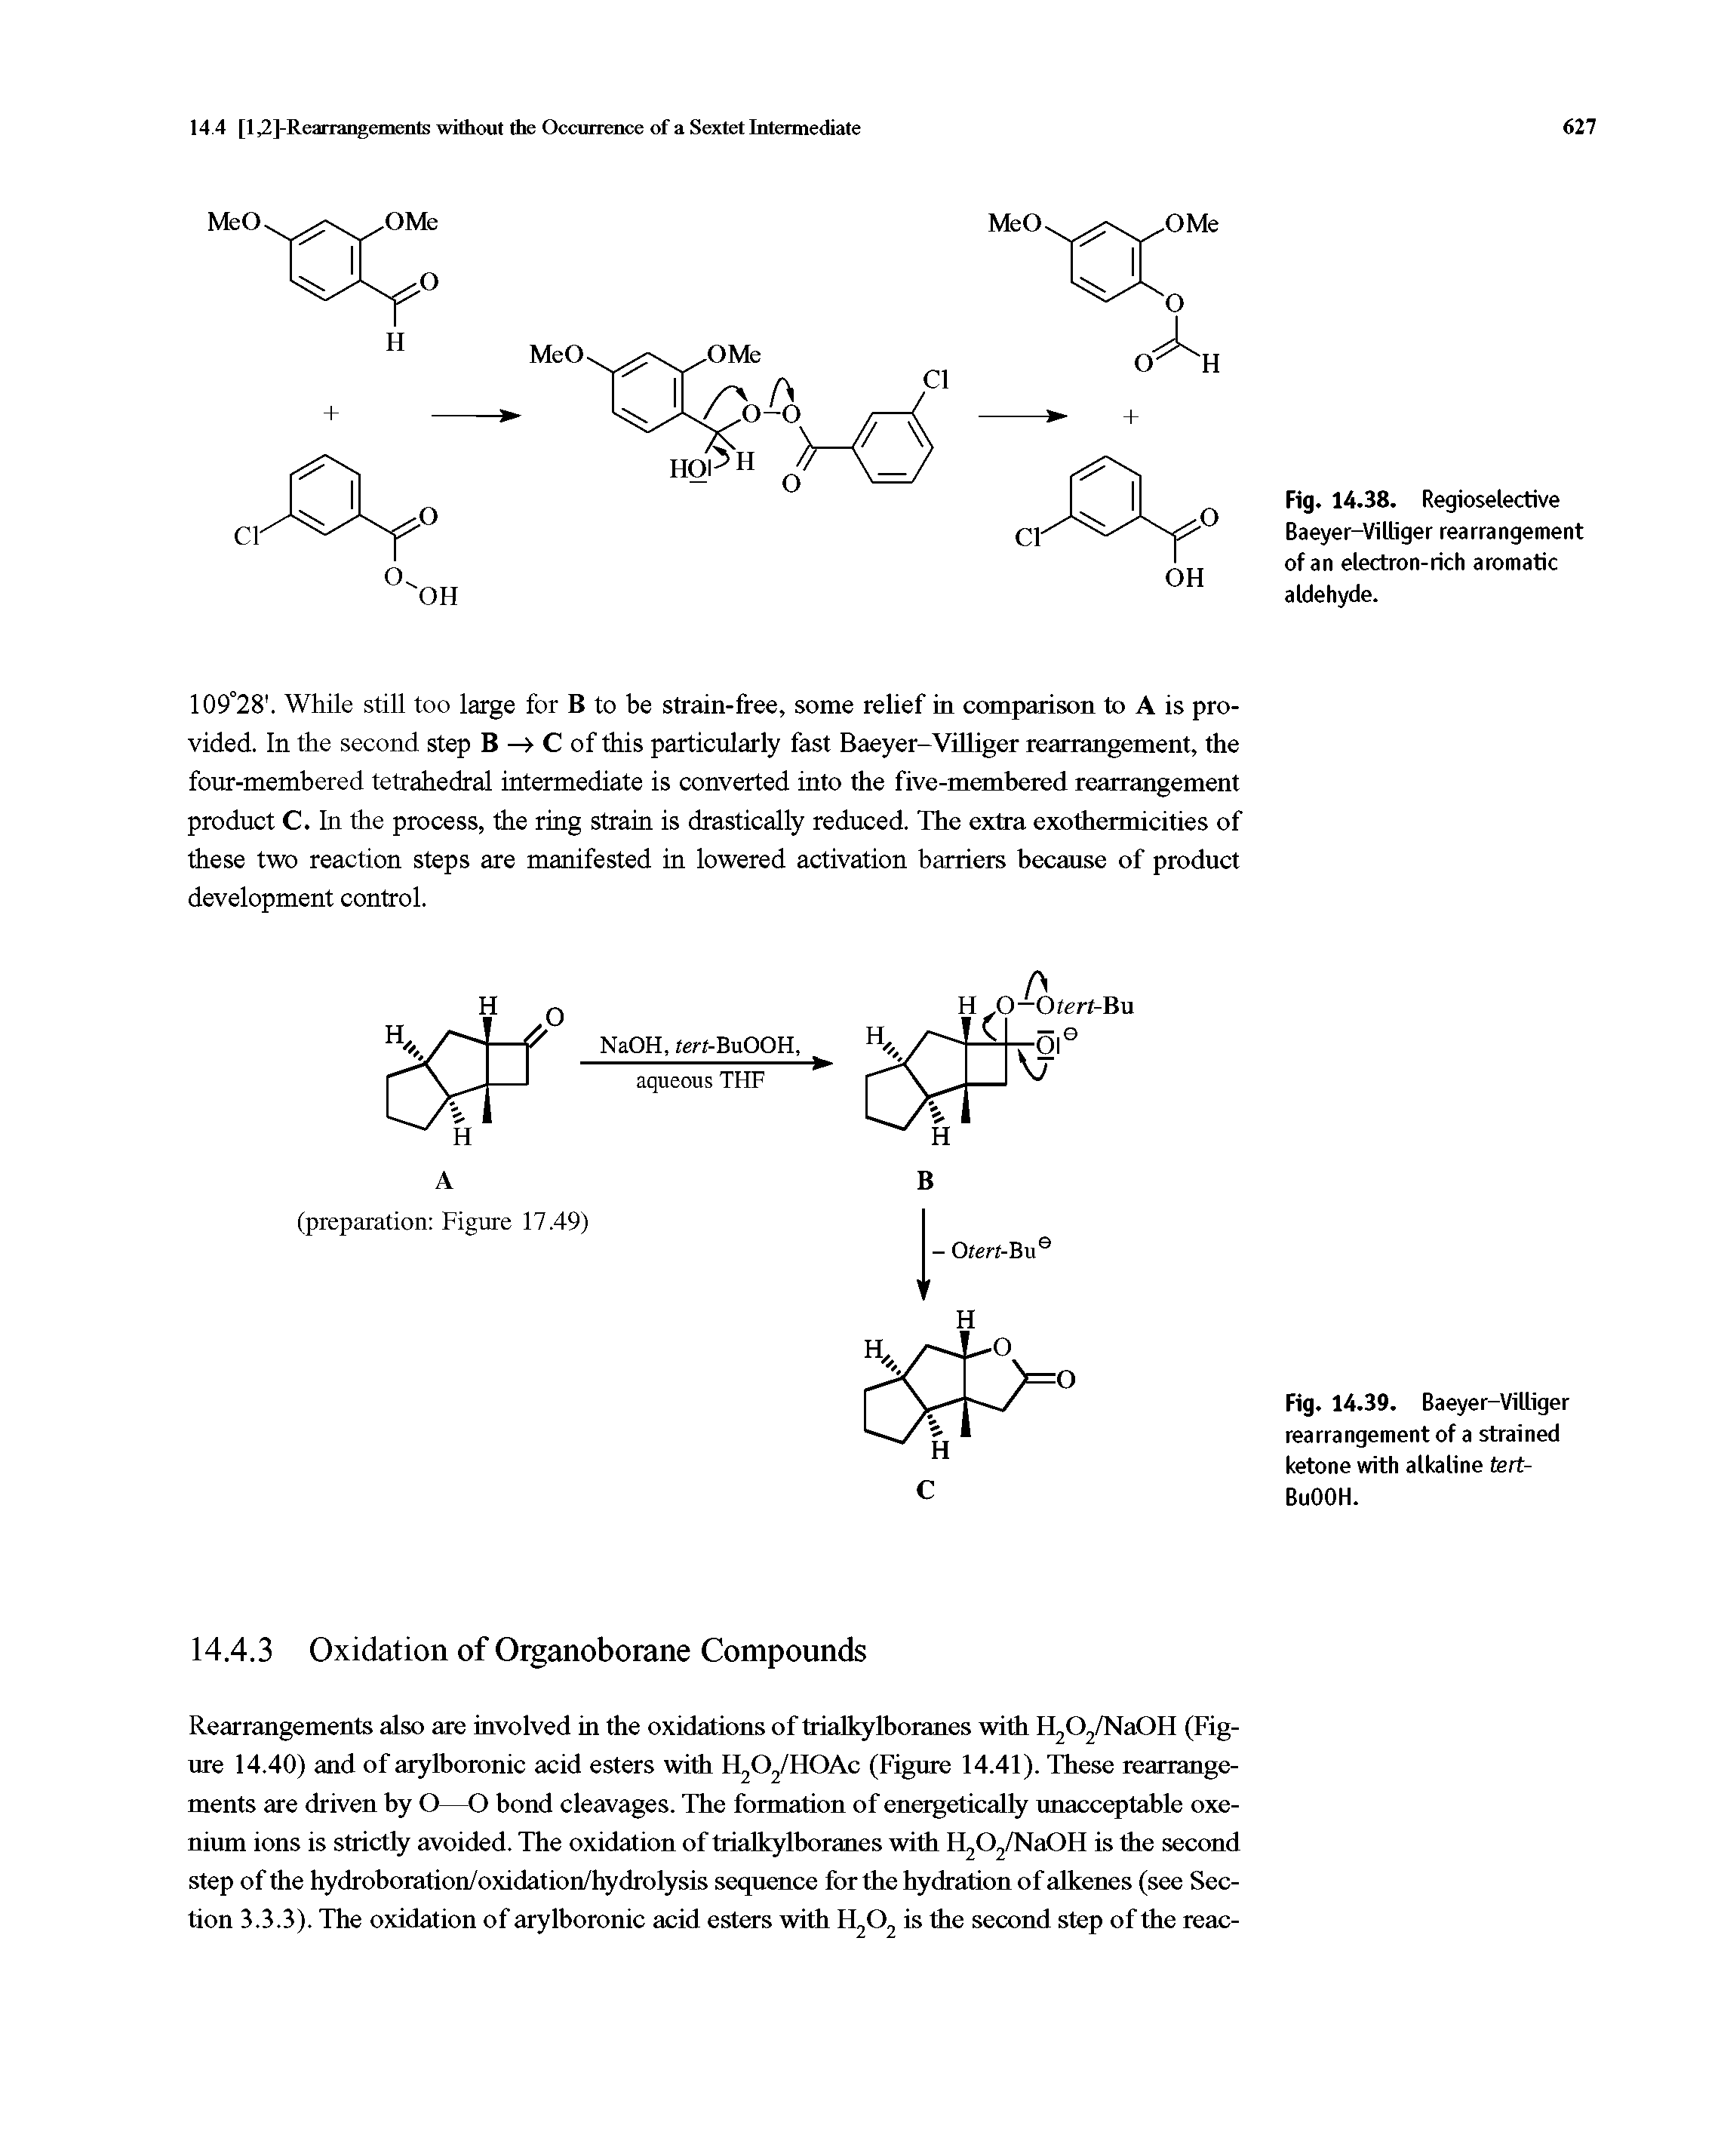 Fig. 14.38. Regioselective Baeyer-Villiger rearrangement of an electron-rich aromatic aldehyde.